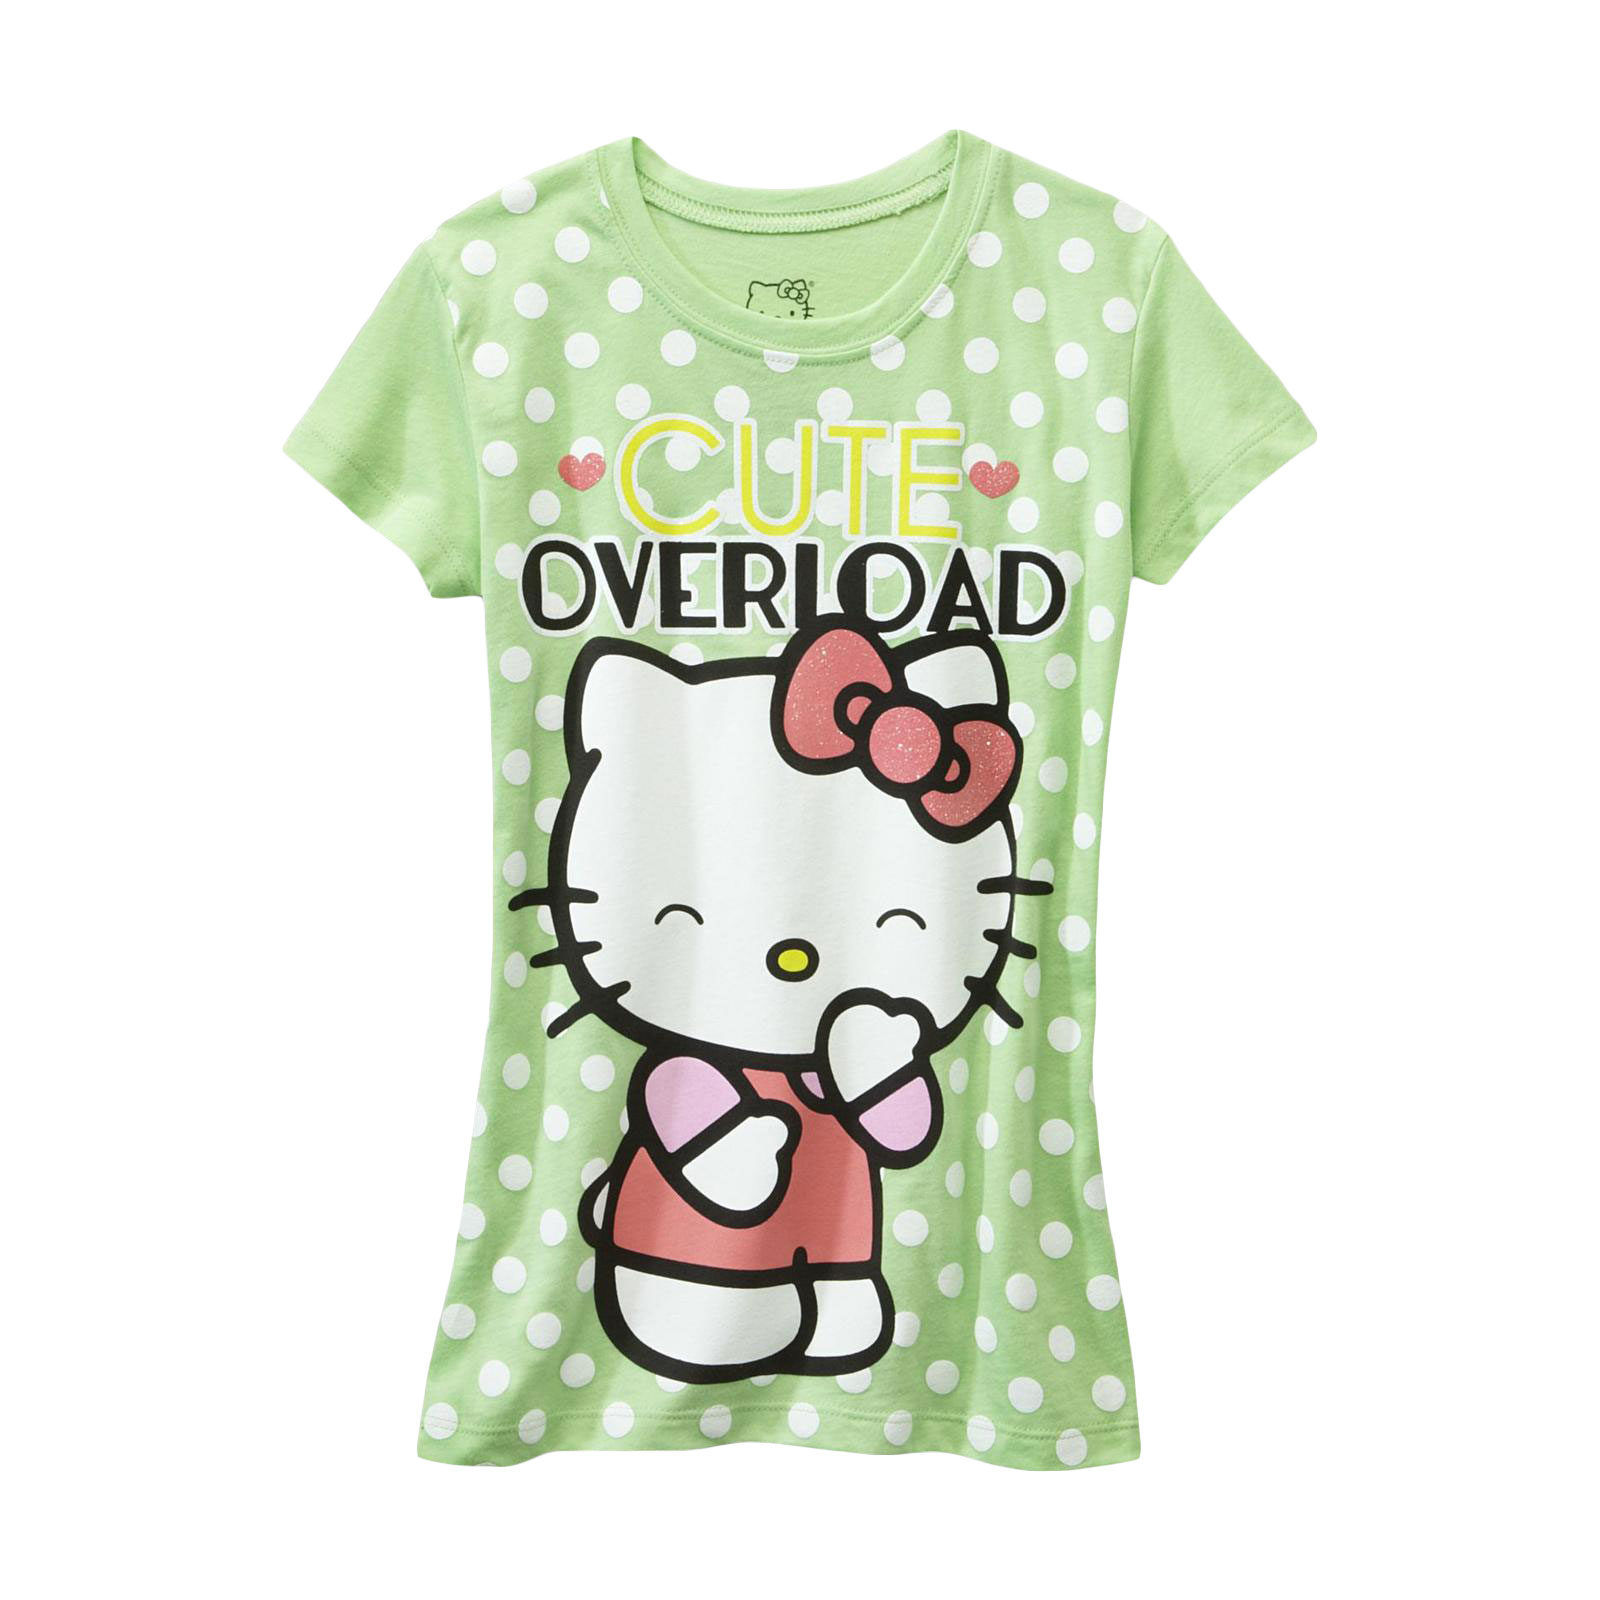 Hello Kitty Girl's Graphic T-Shirt - Cute Overload